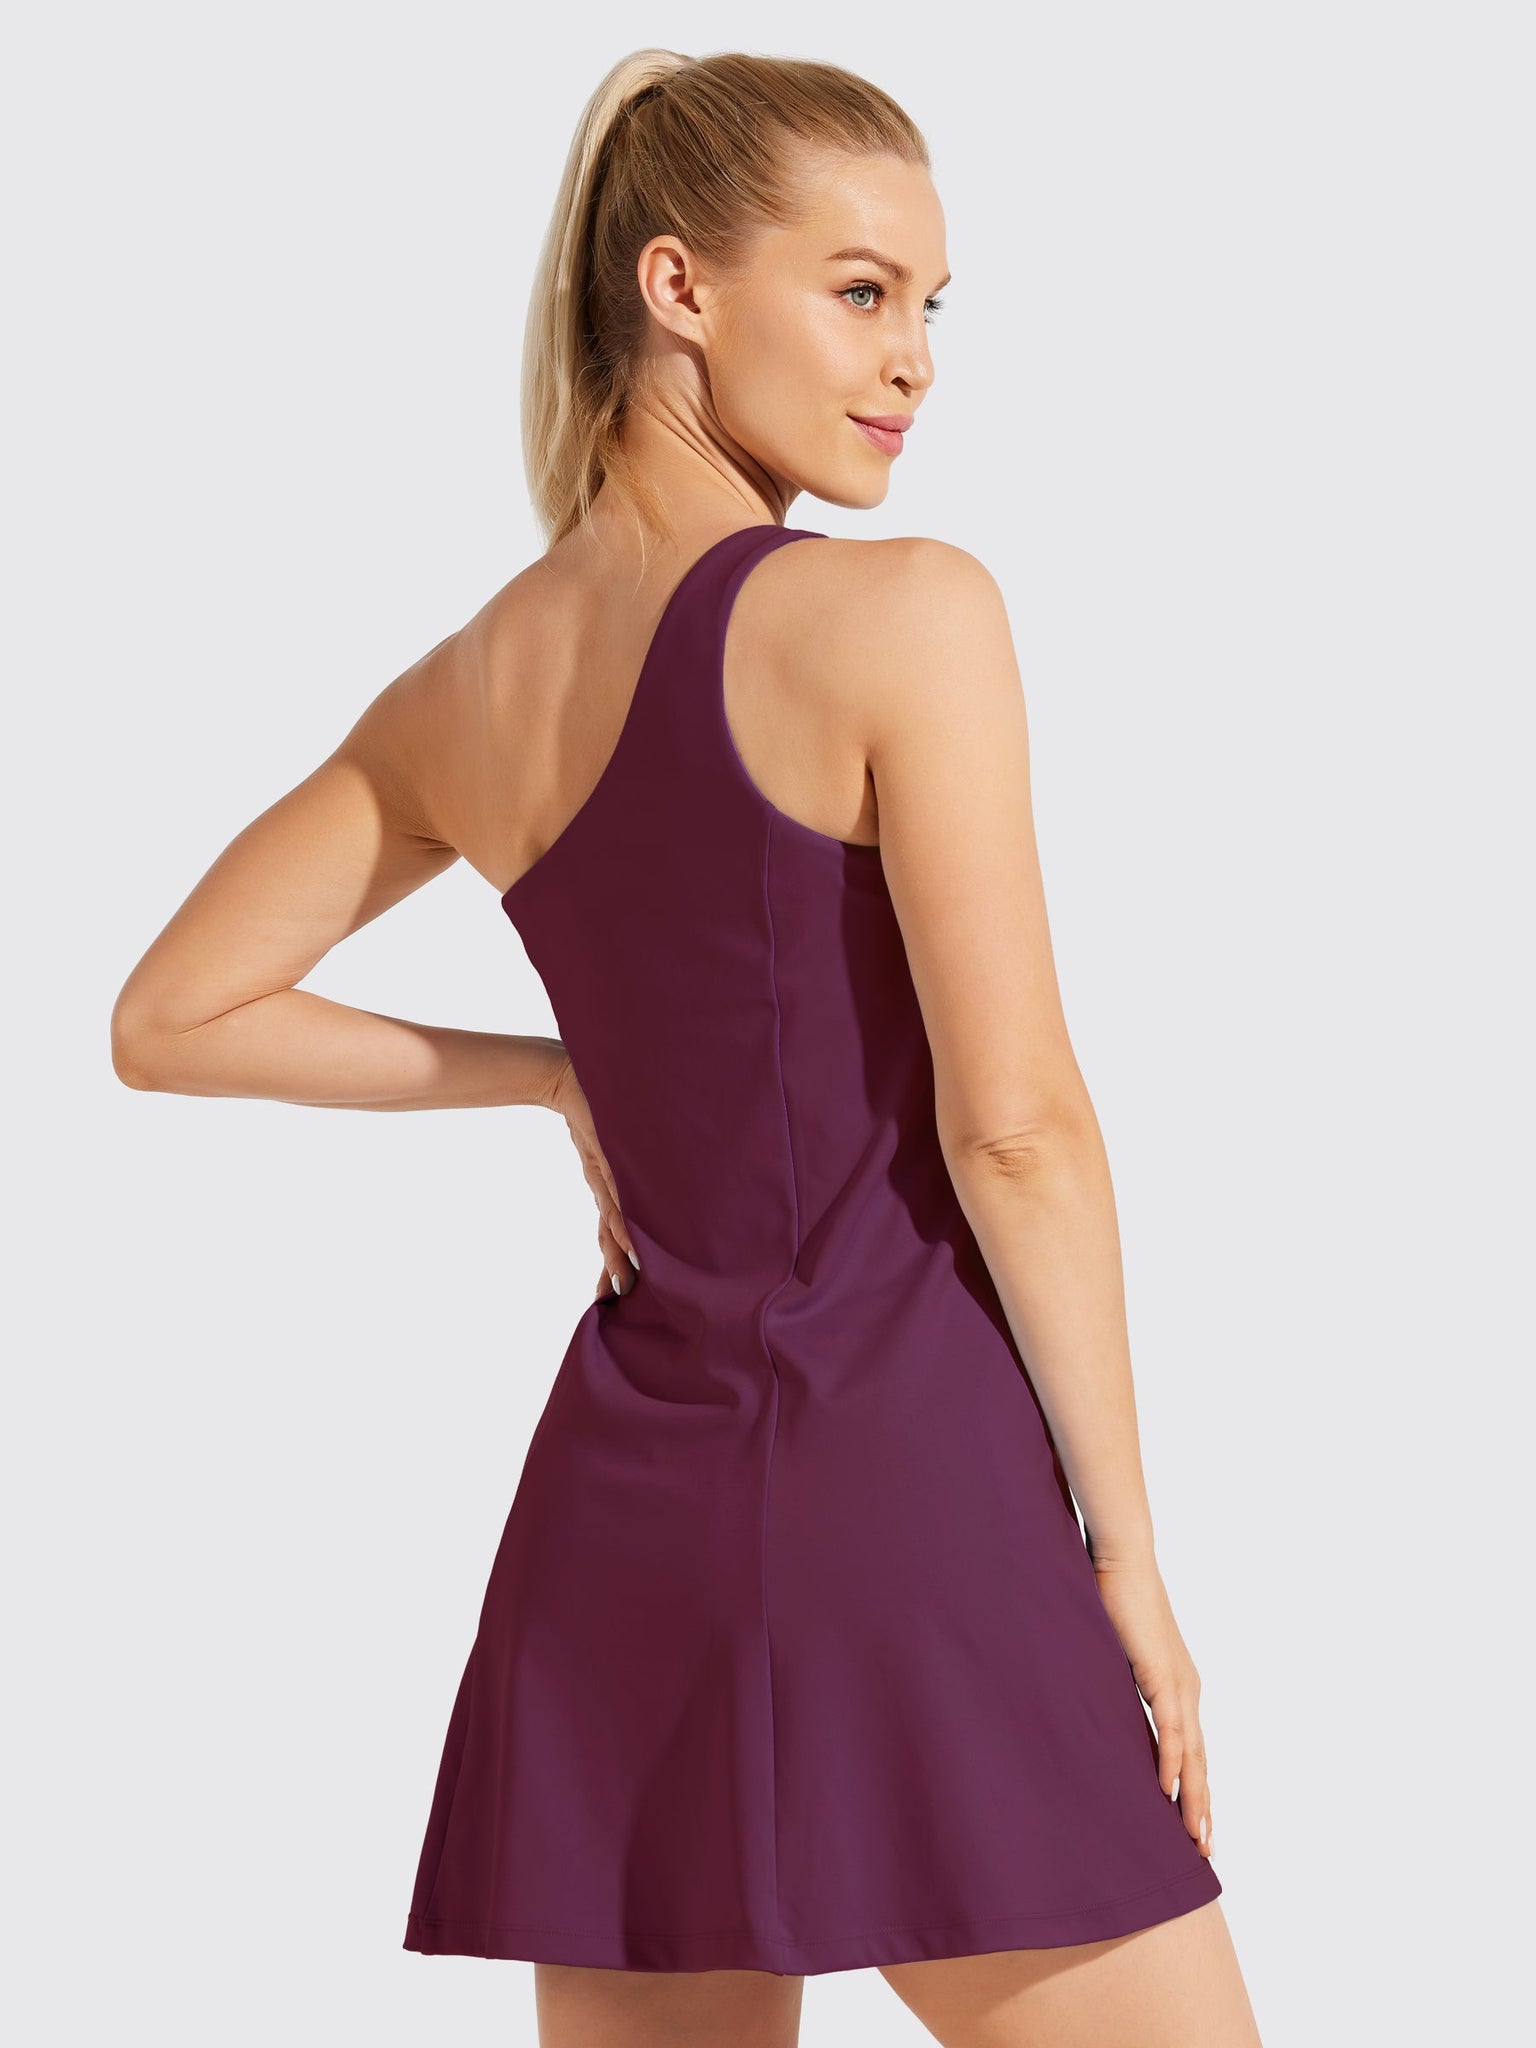 Willit Women's One Shoulder Dress_Purple3